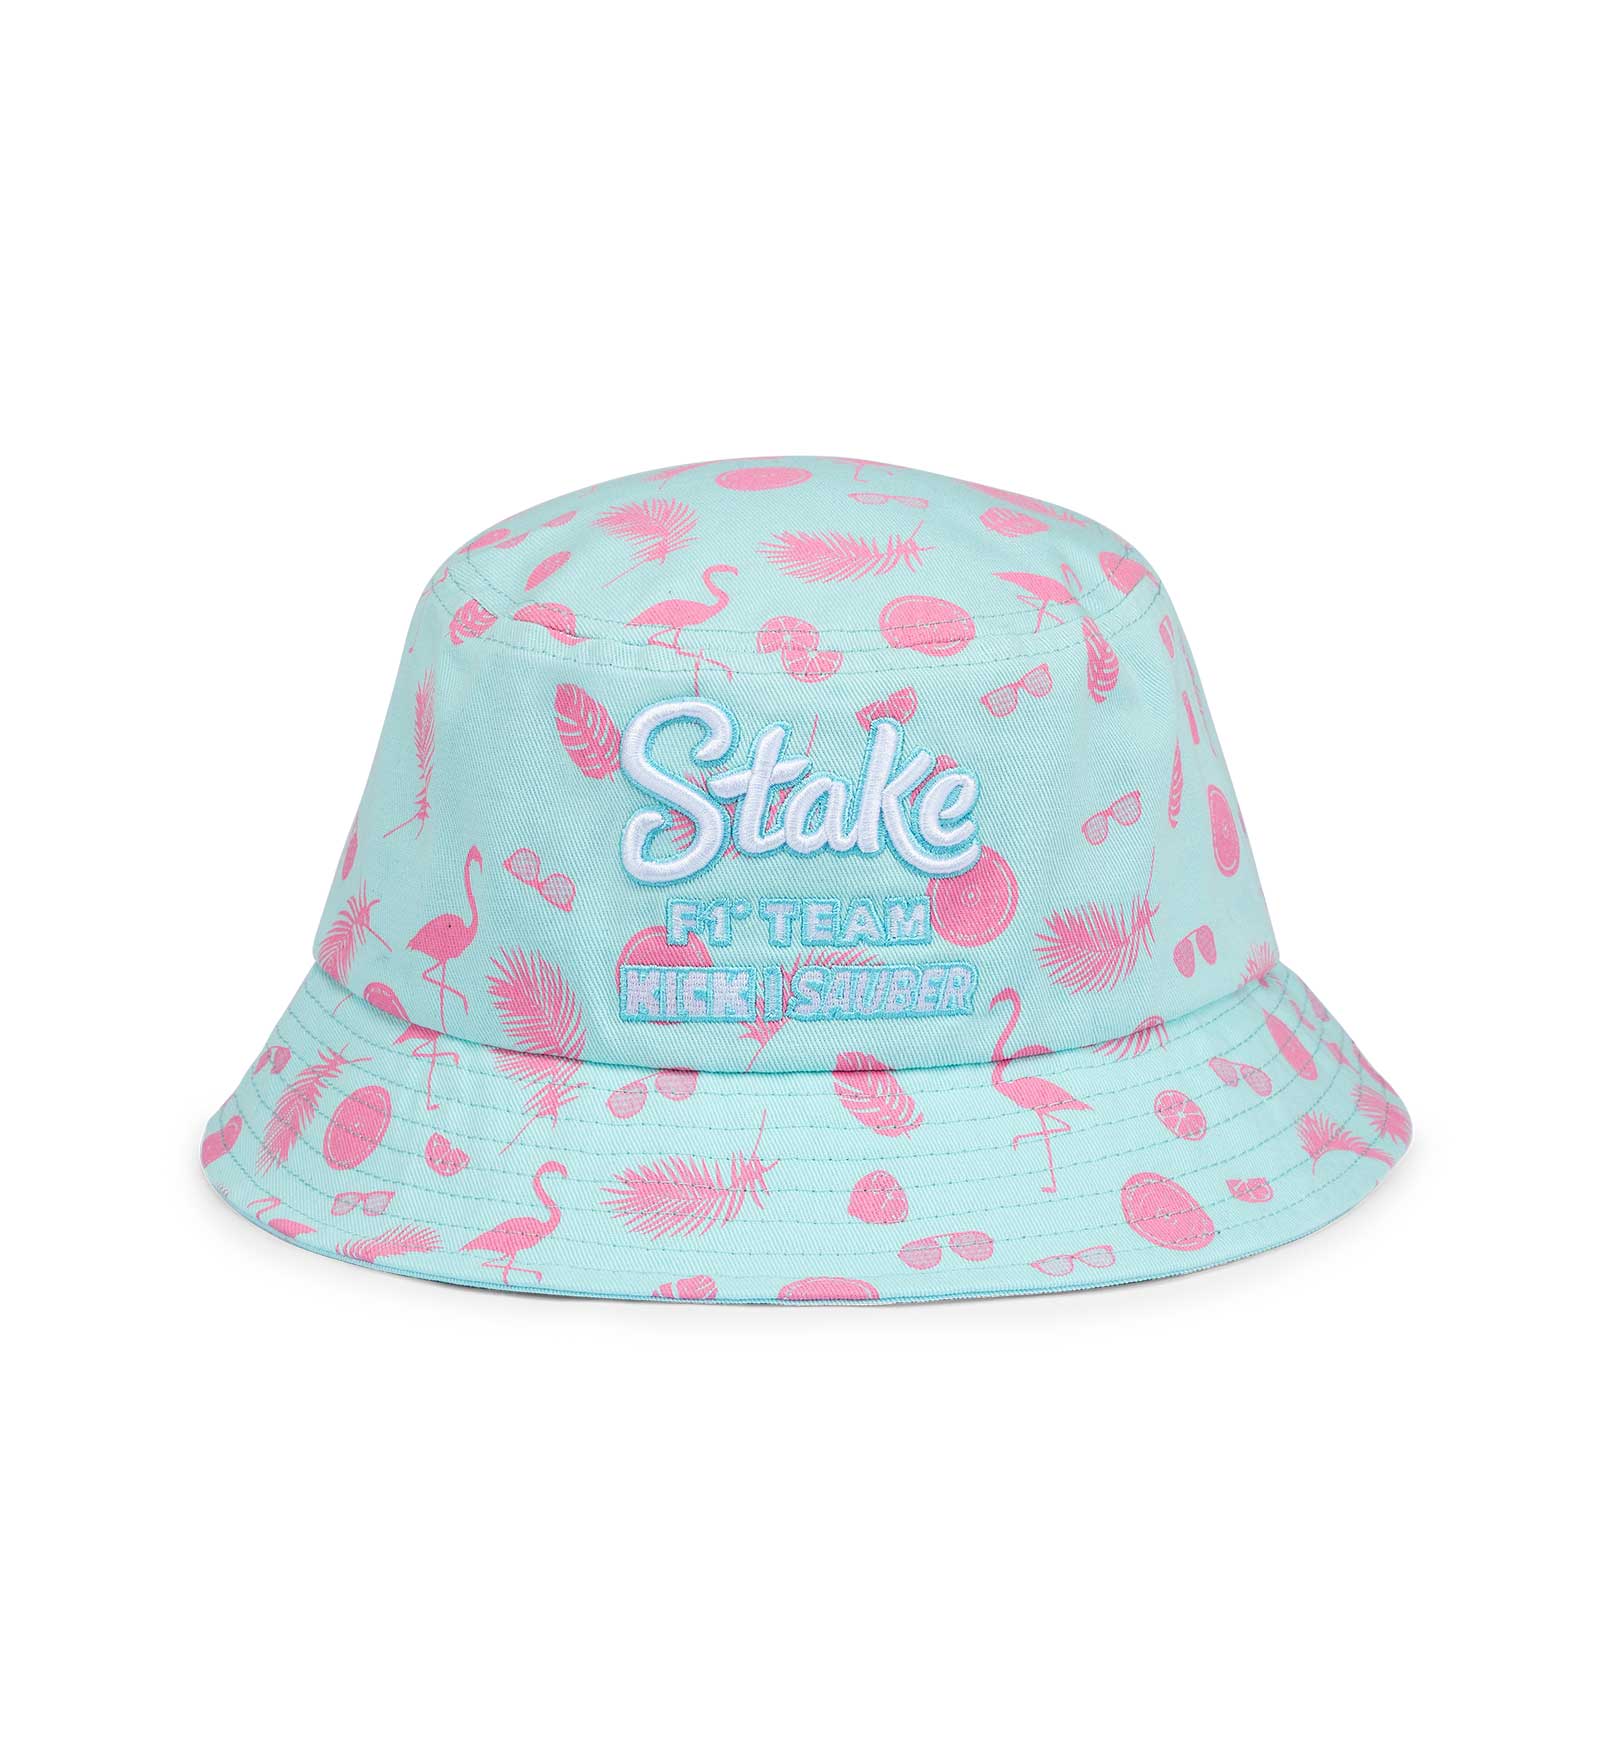 Bucket Hat Pink for Men and Women 